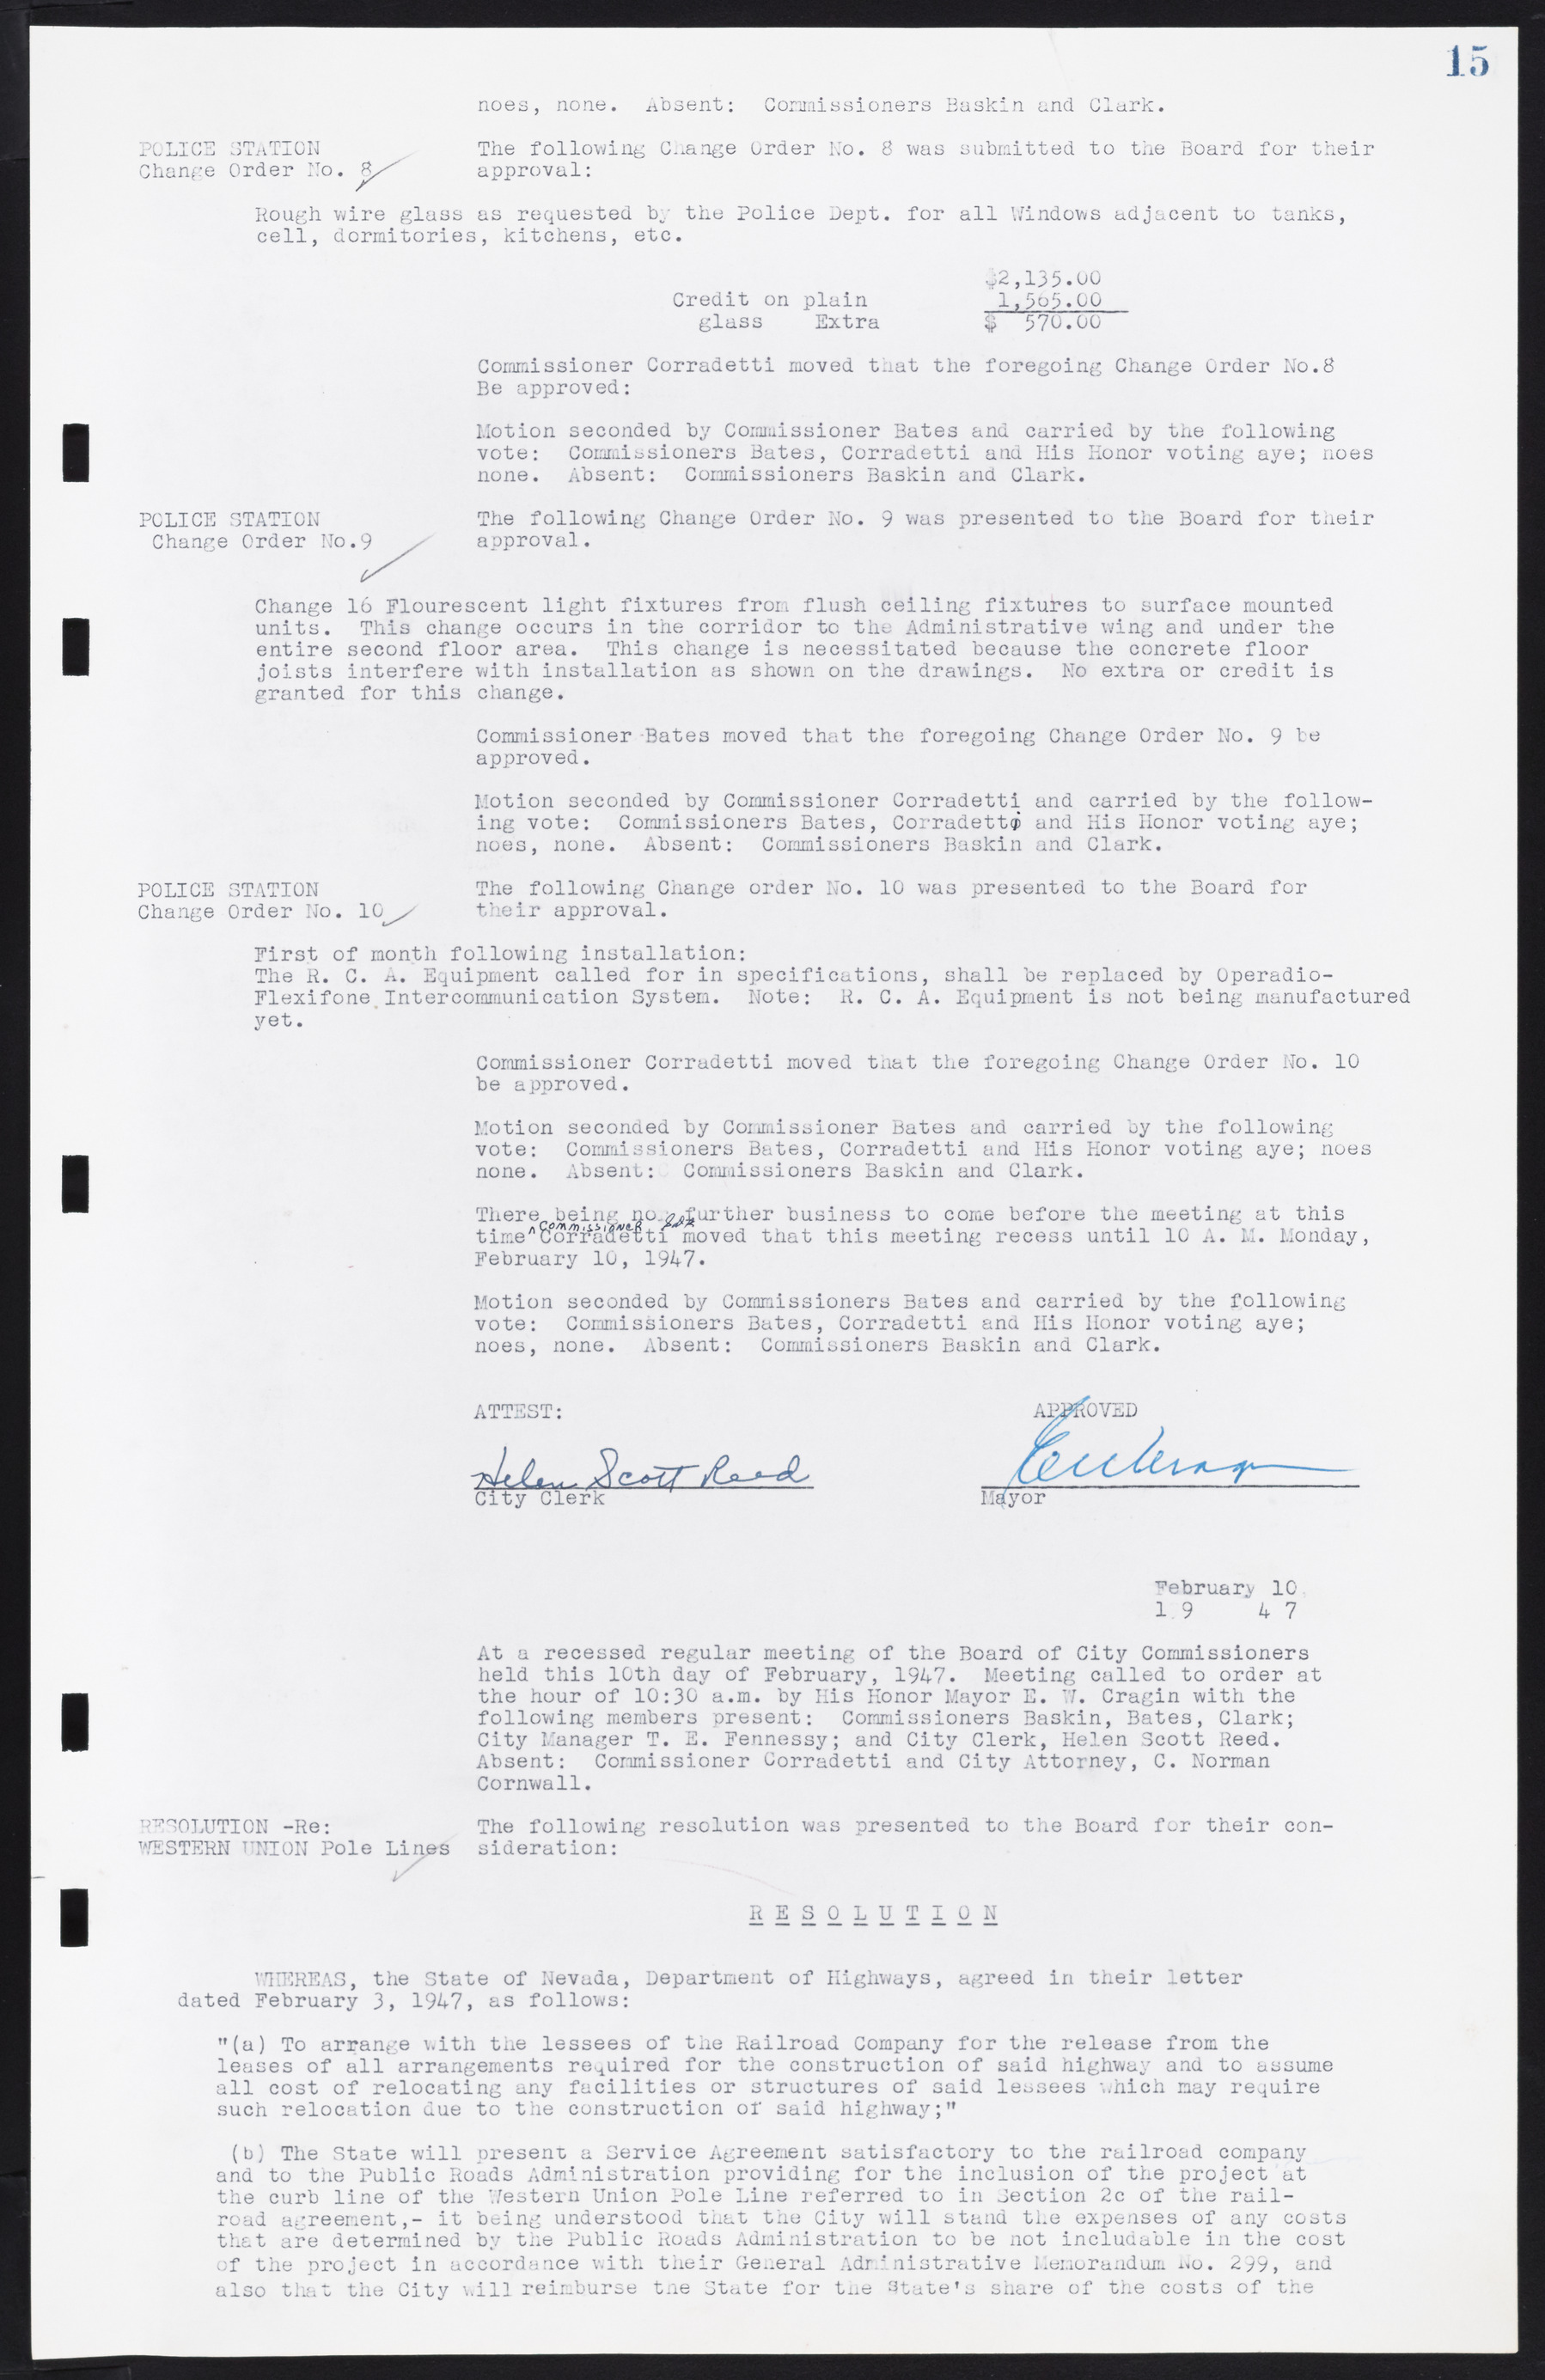 Las Vegas City Commission Minutes, January 7, 1947 to October 26, 1949, lvc000006-23